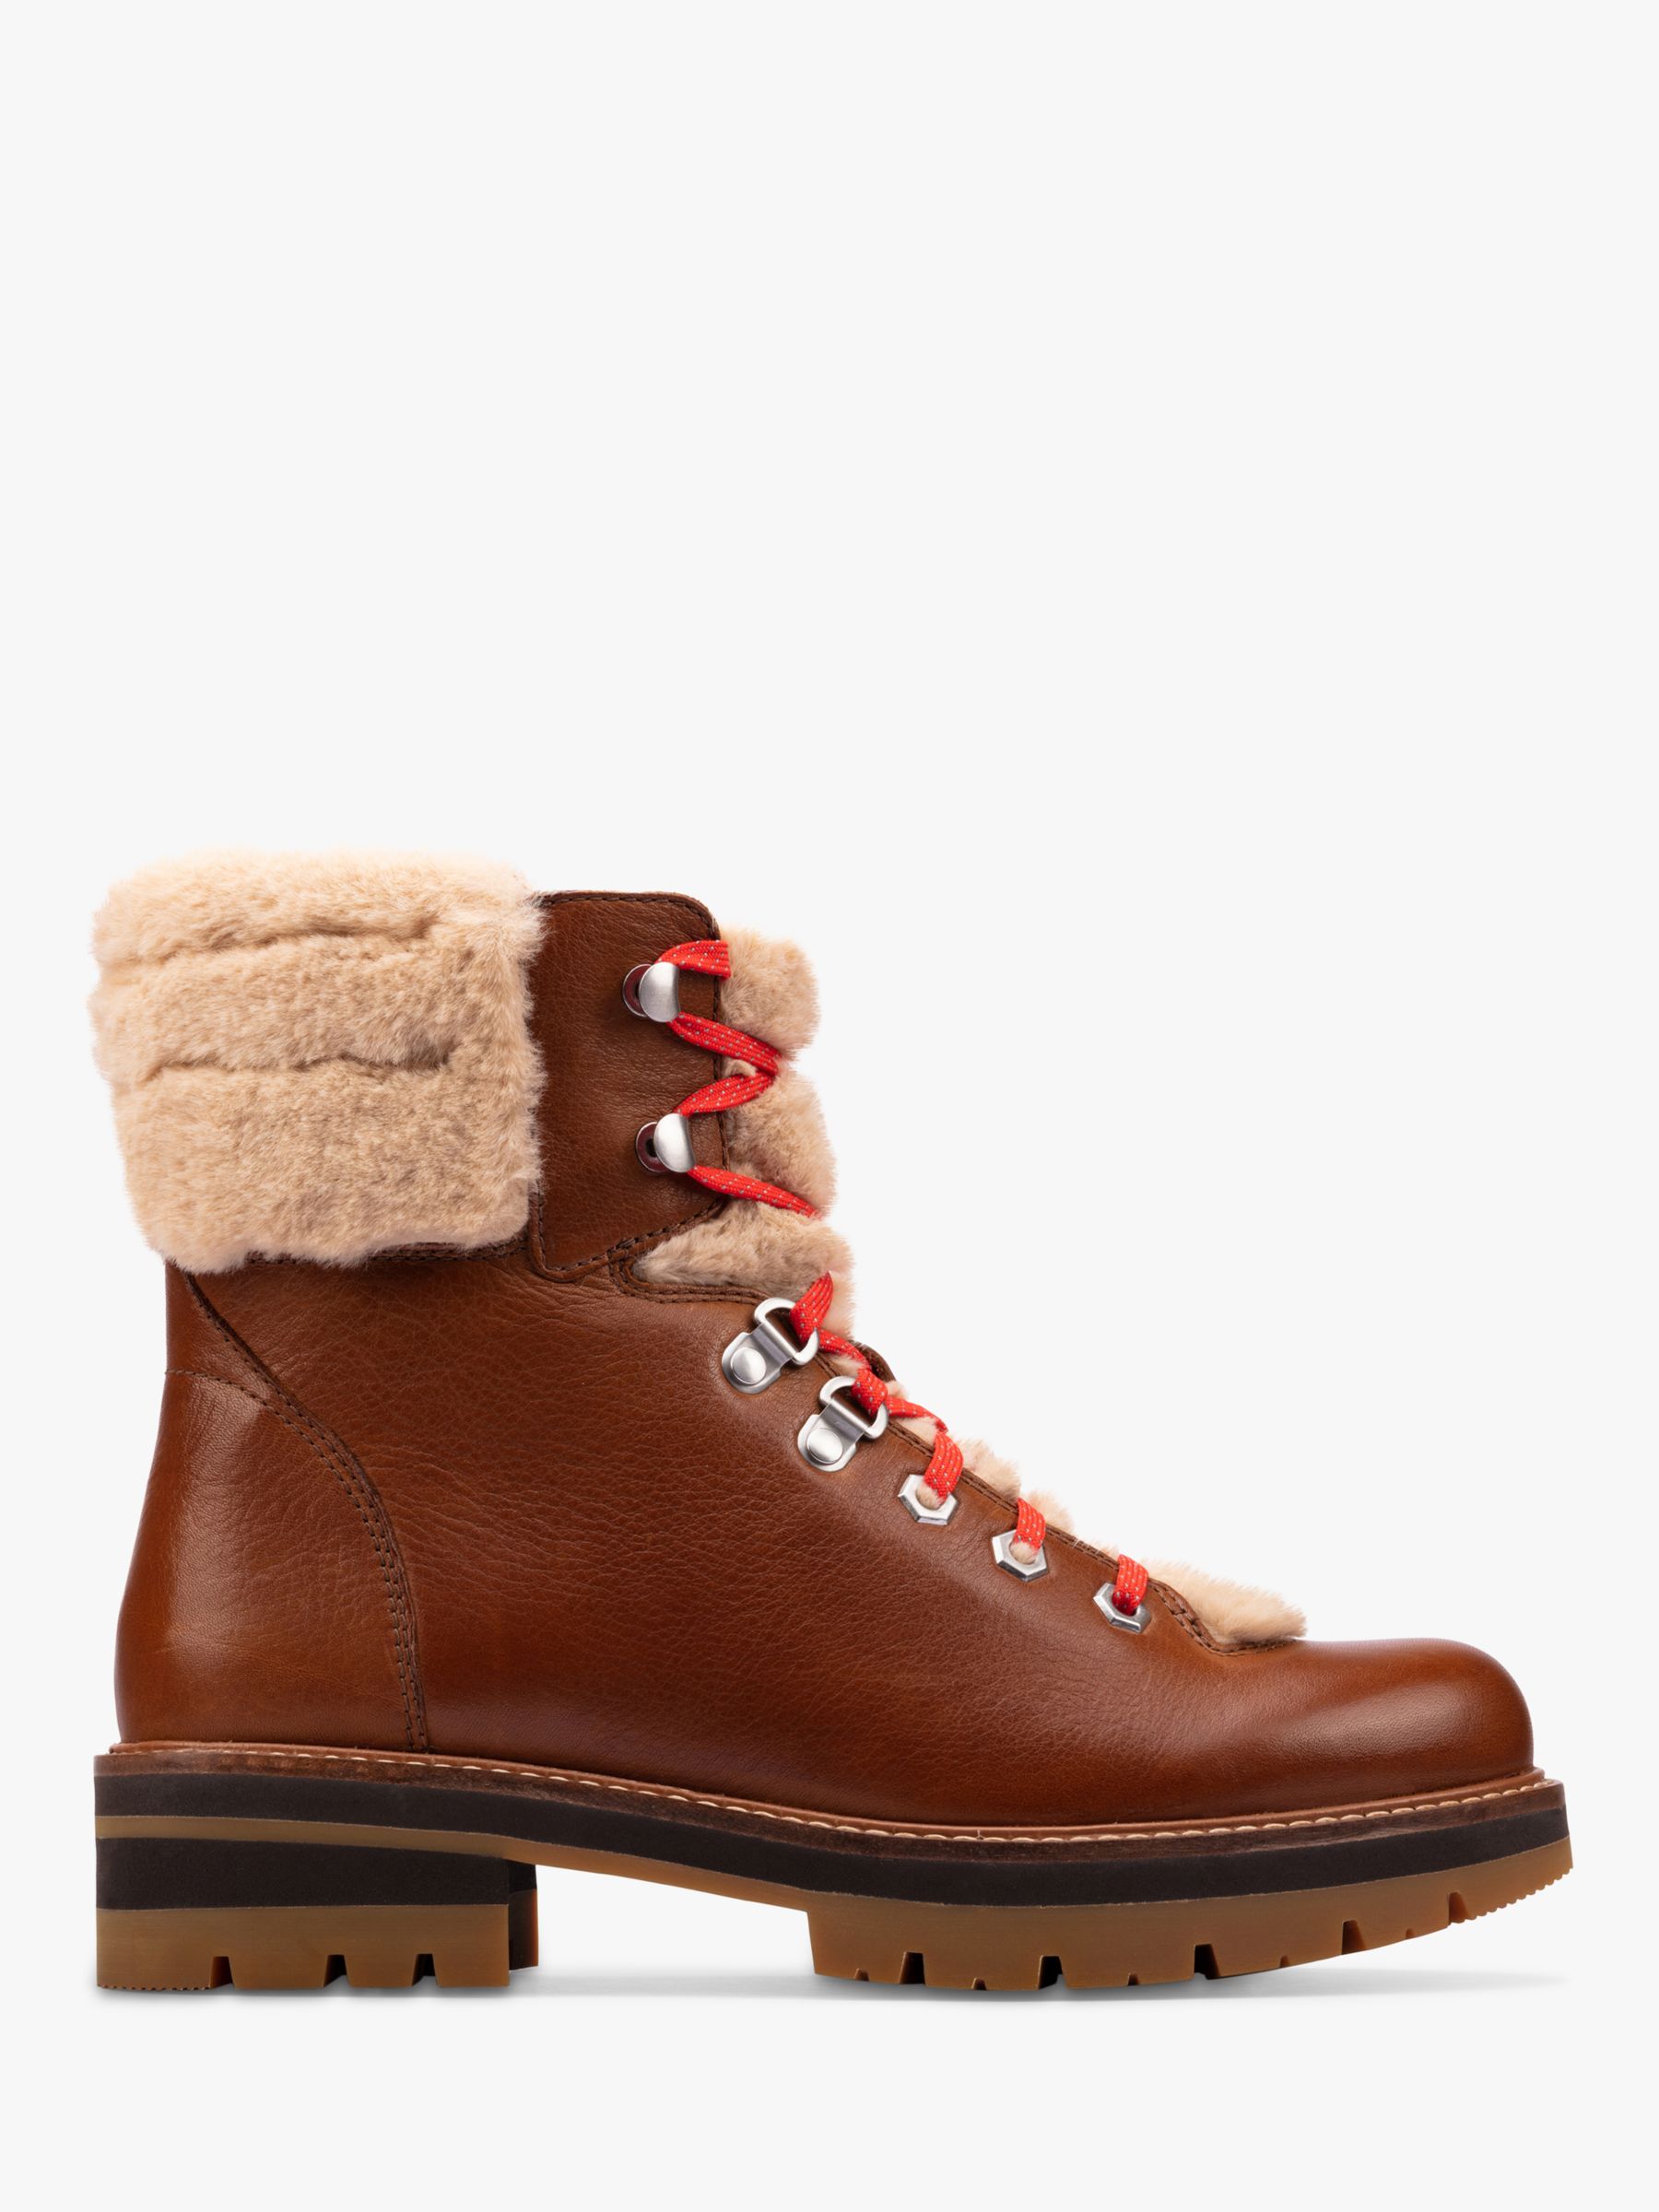 Clarks Orianna Chunky Fur Top Leather Hiker Boots, Dark Tan, 3